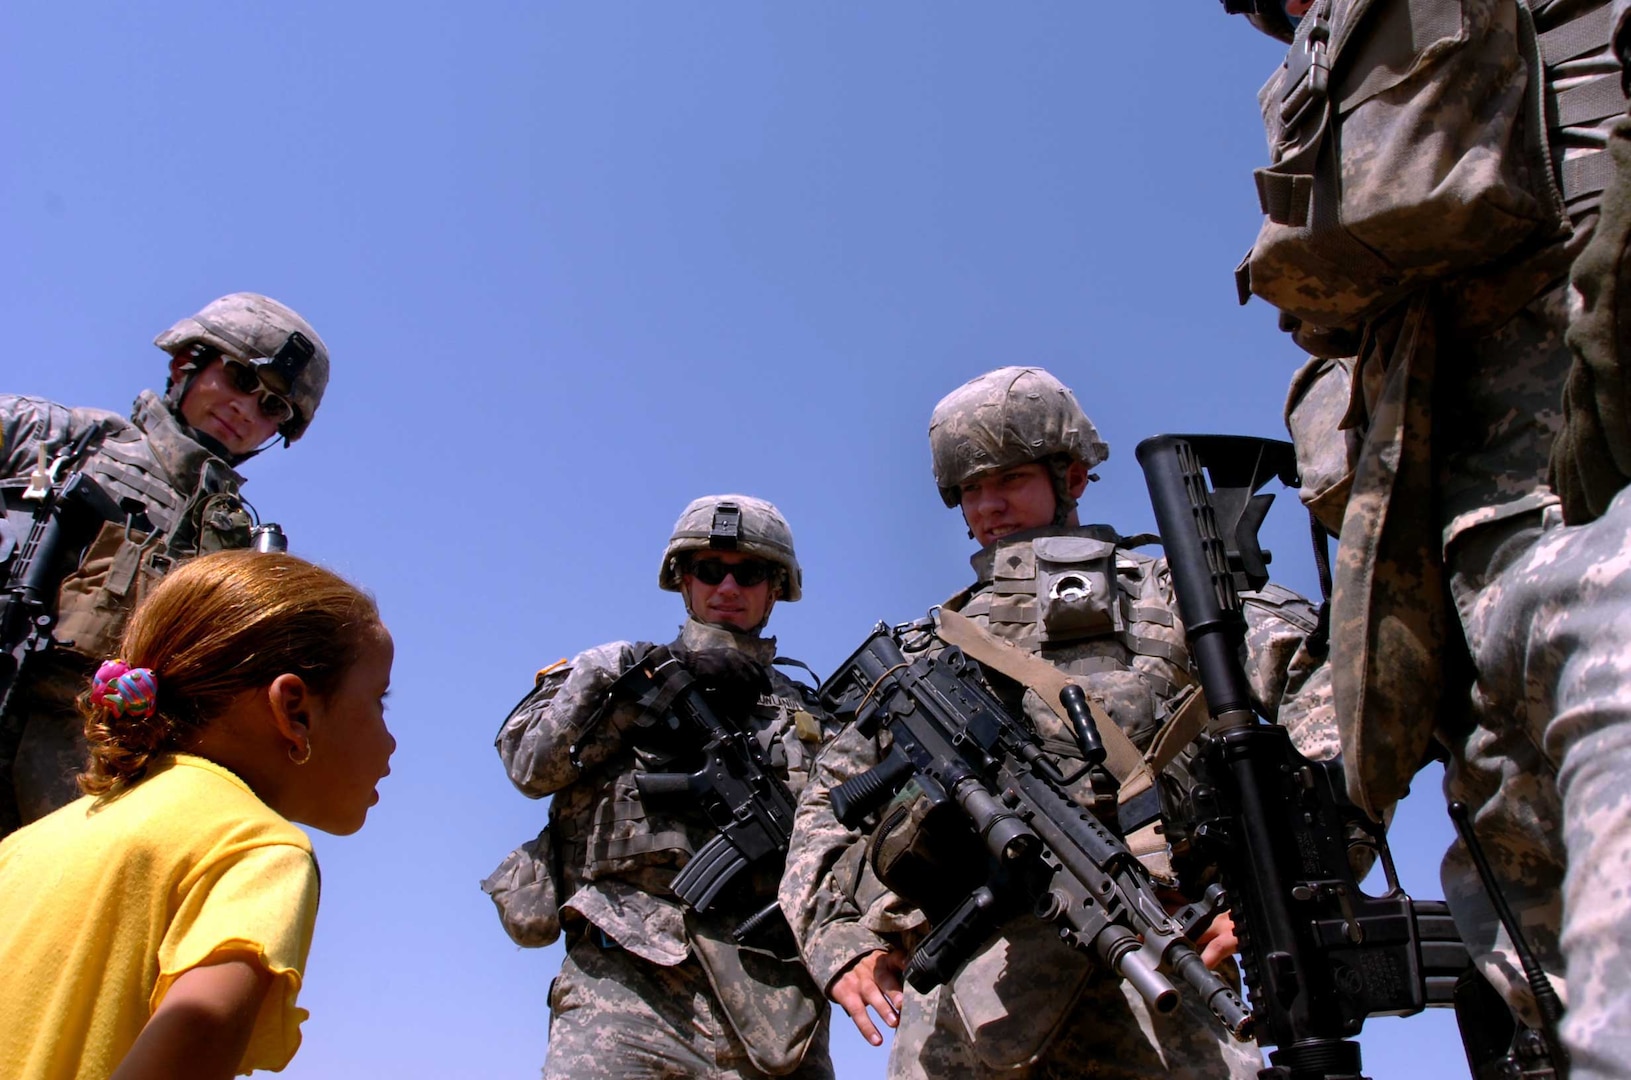 The ACU or Army Combat Uniform - Kentucky National Guard